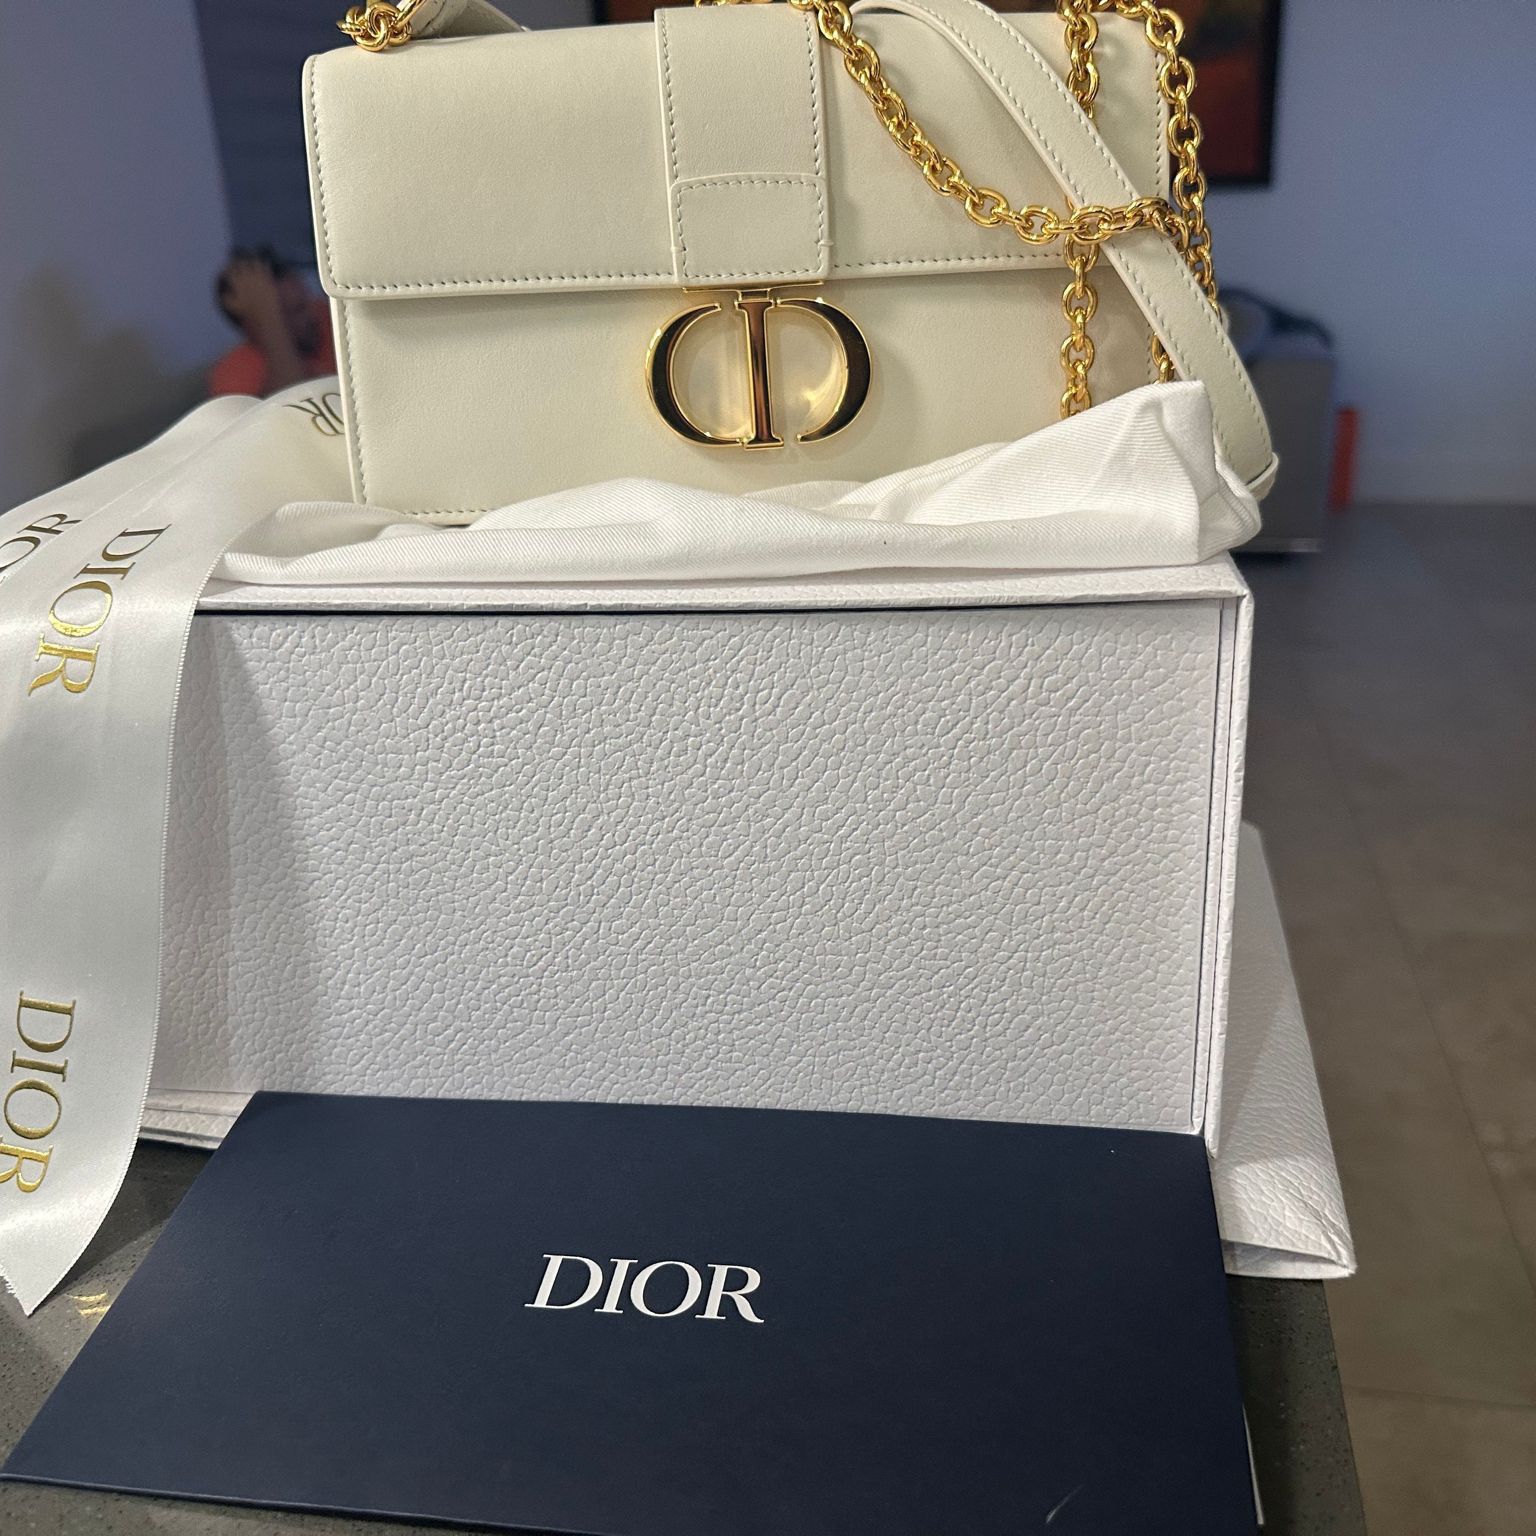 Dior 30 Montaigne East-West Bag